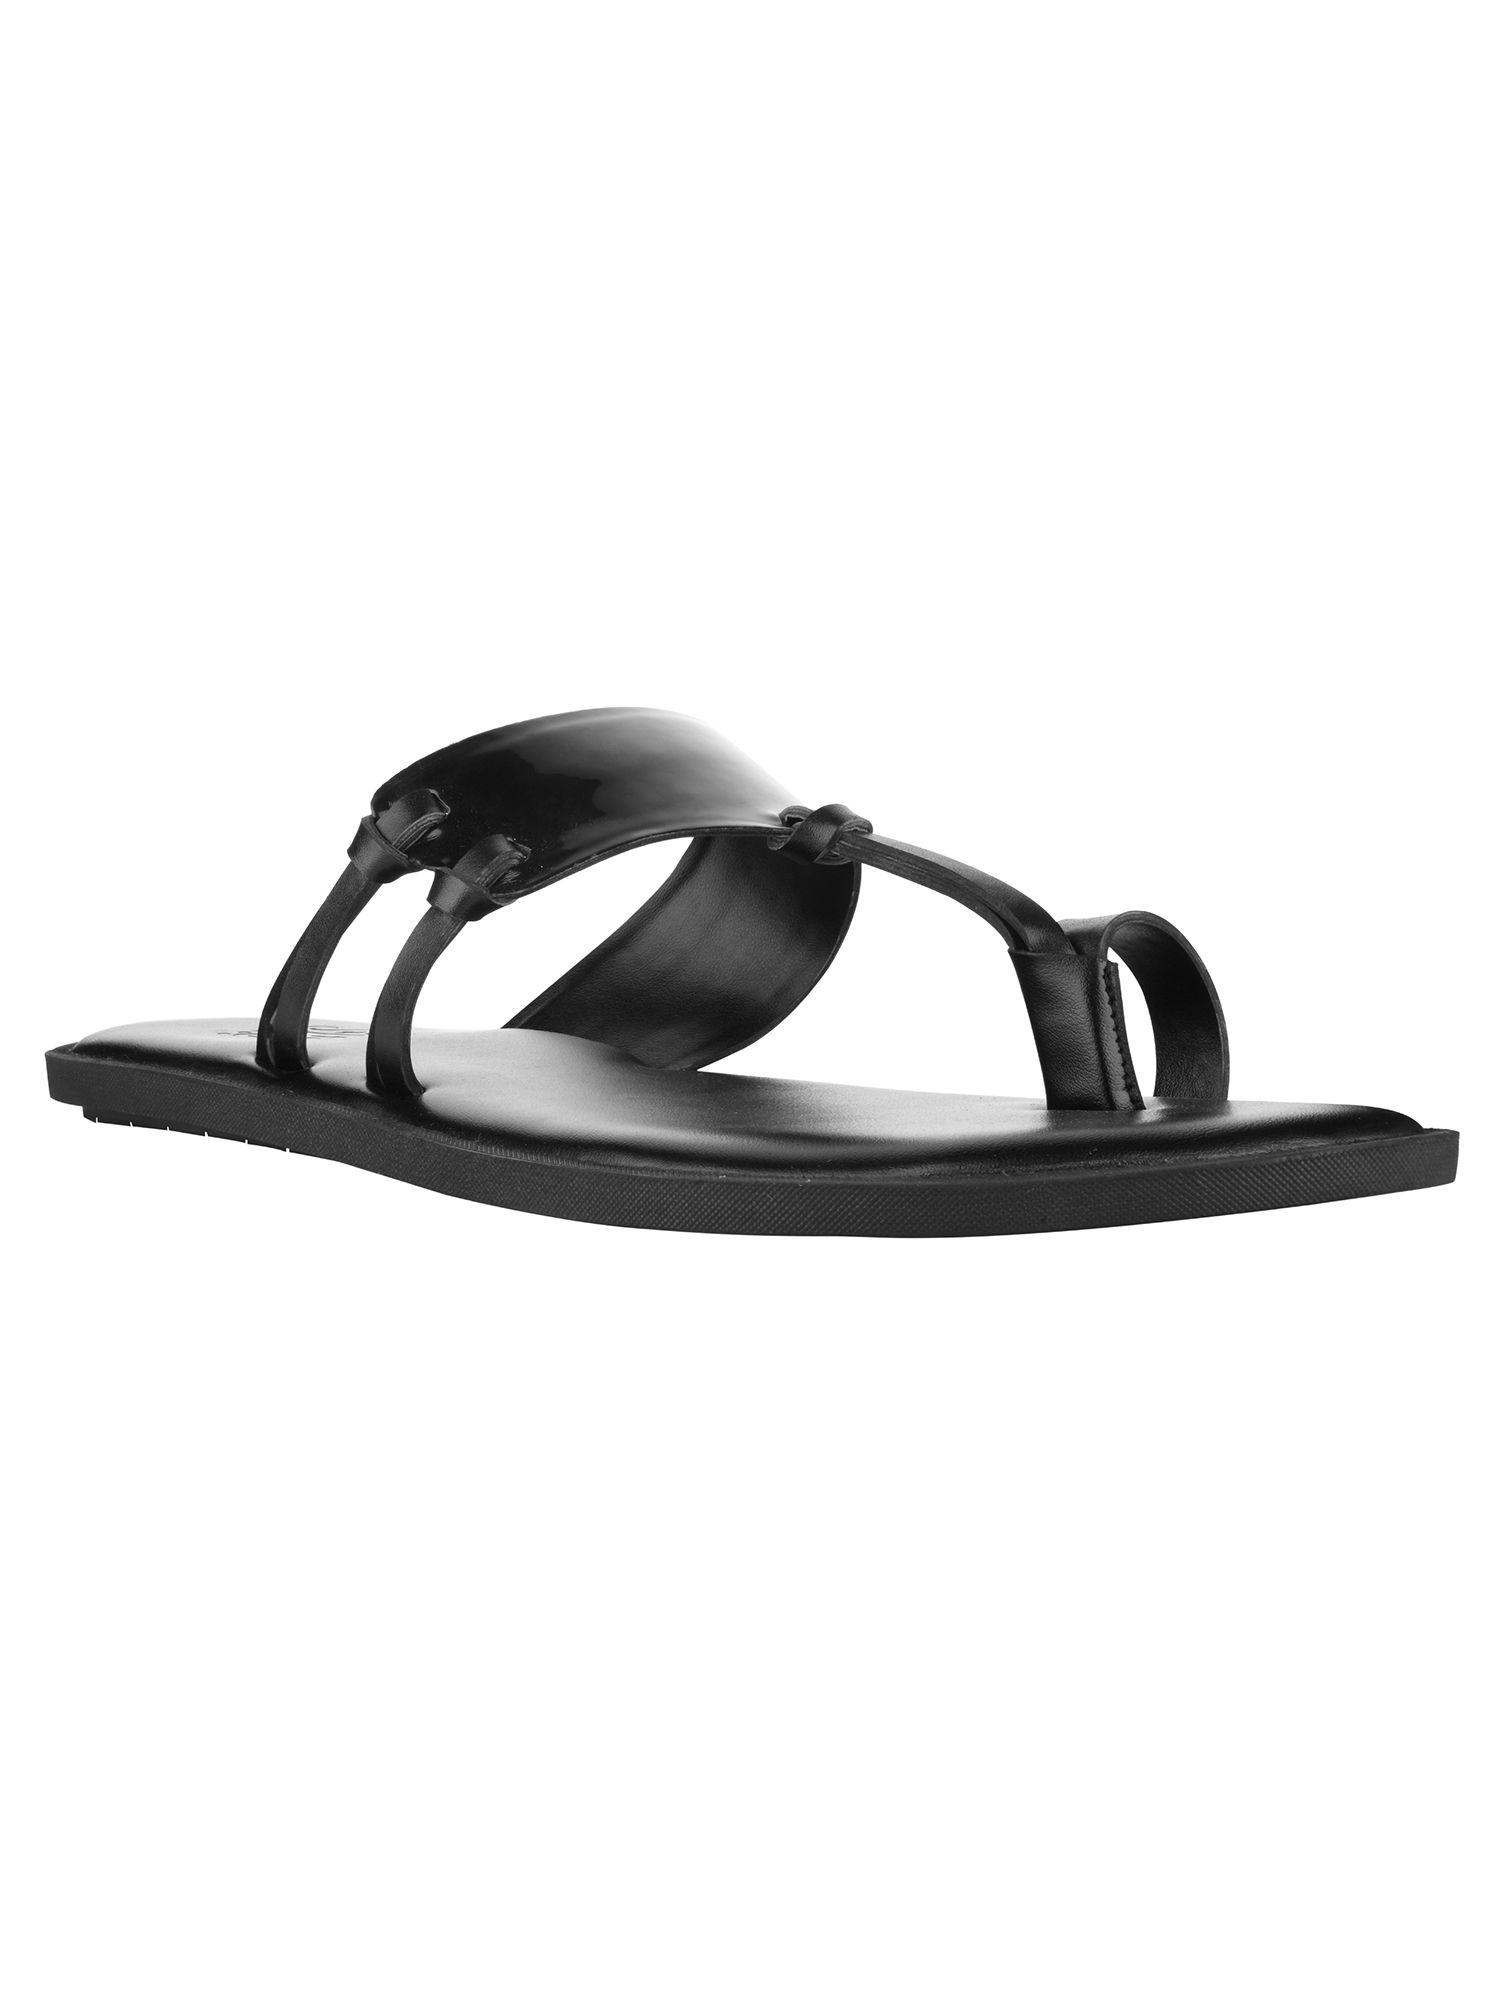 indy black patent sandals for men